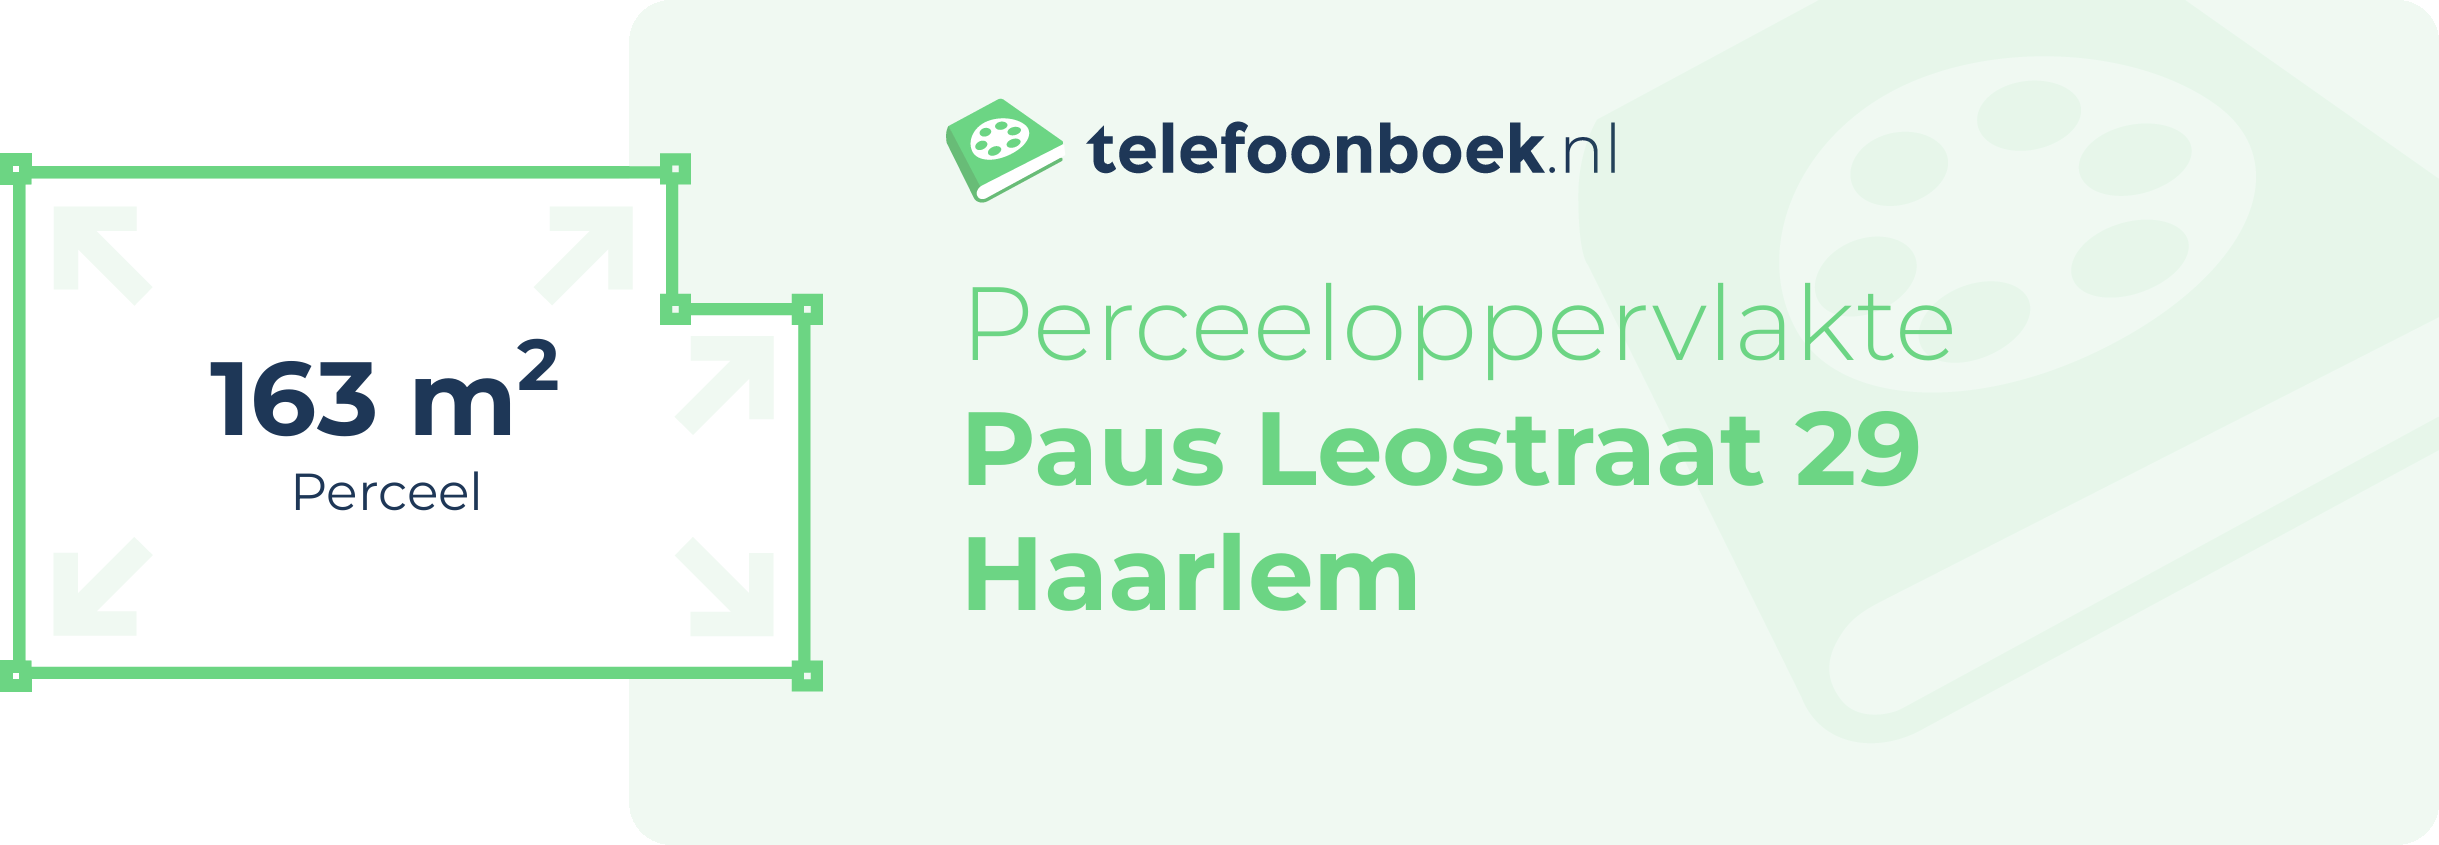 Perceeloppervlakte Paus Leostraat 29 Haarlem